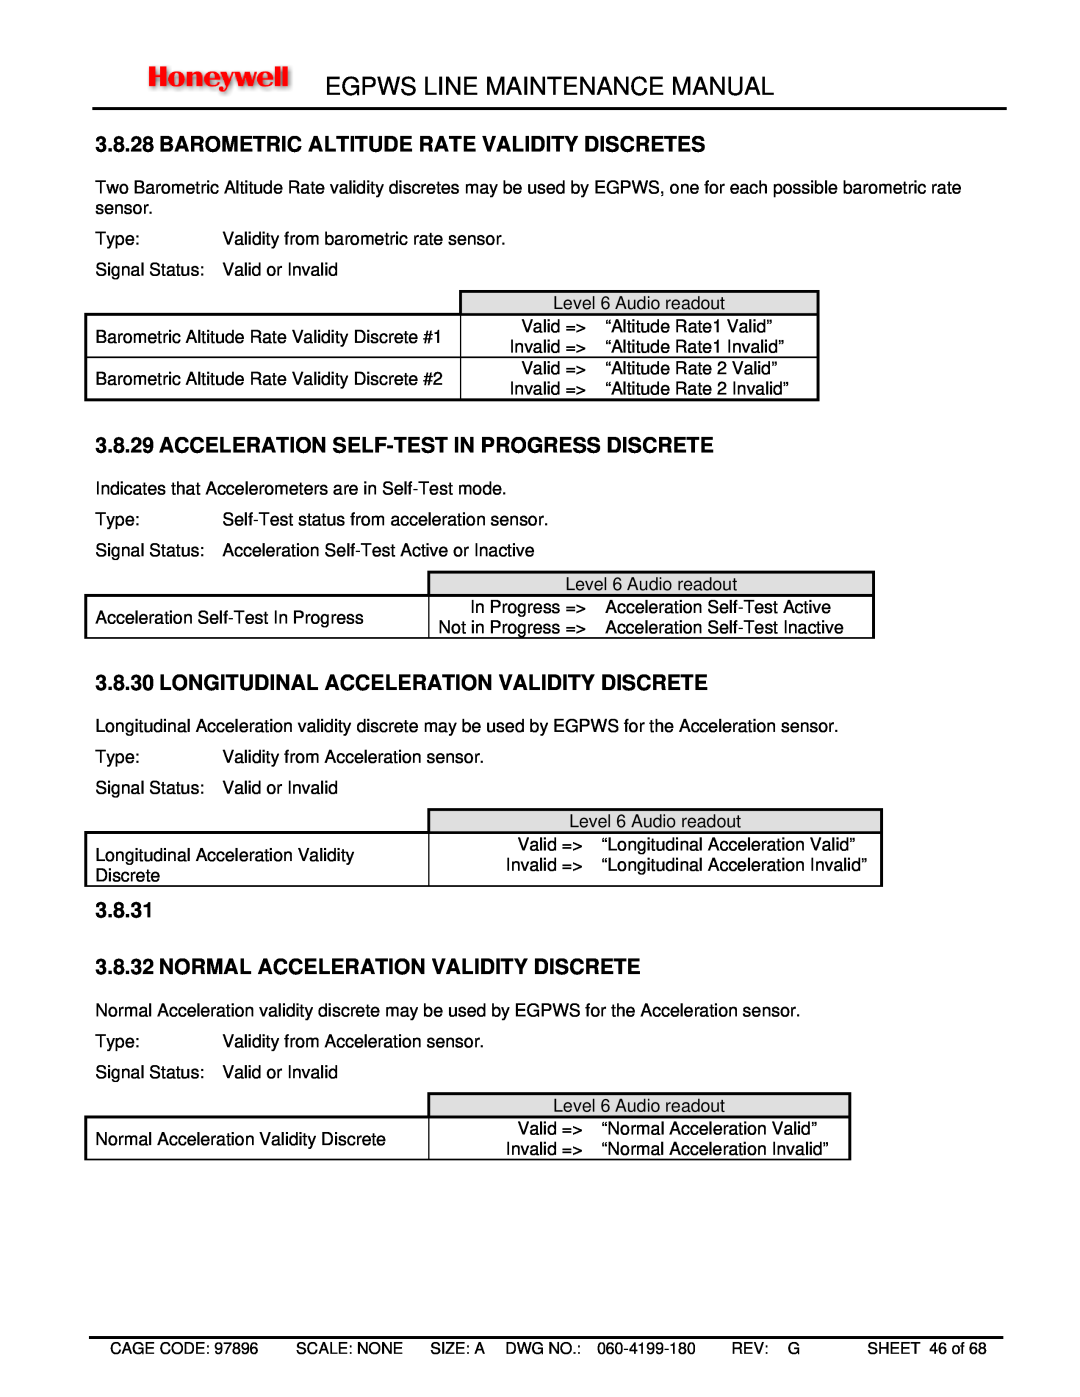 Honeywell MK VIII, MK XXII manual Acceleration Self-Testin Progress Discrete, 3.8.31, Normal Acceleration Validity Discrete 